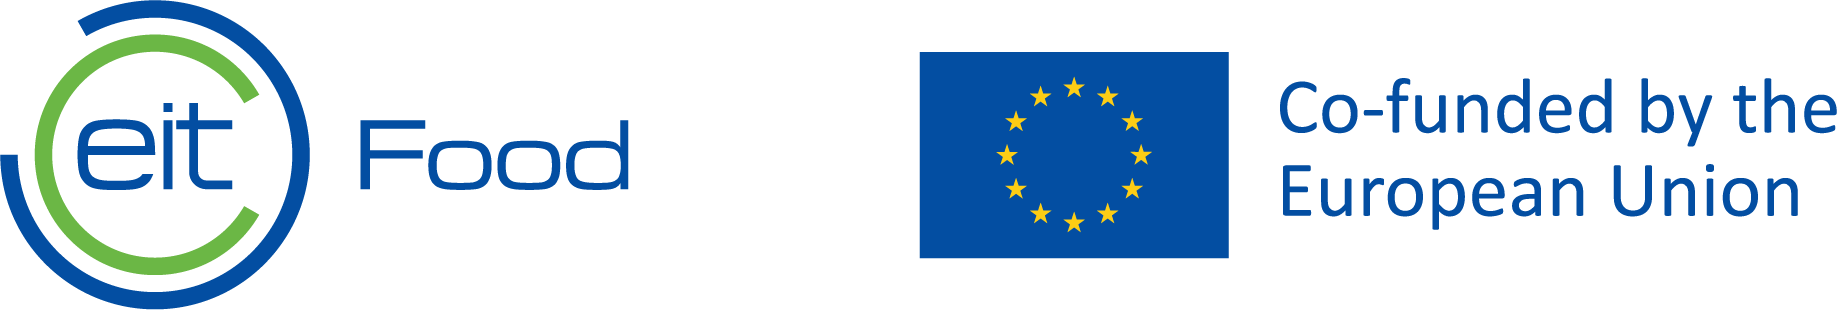 EIT food and EU logo. Illustration.